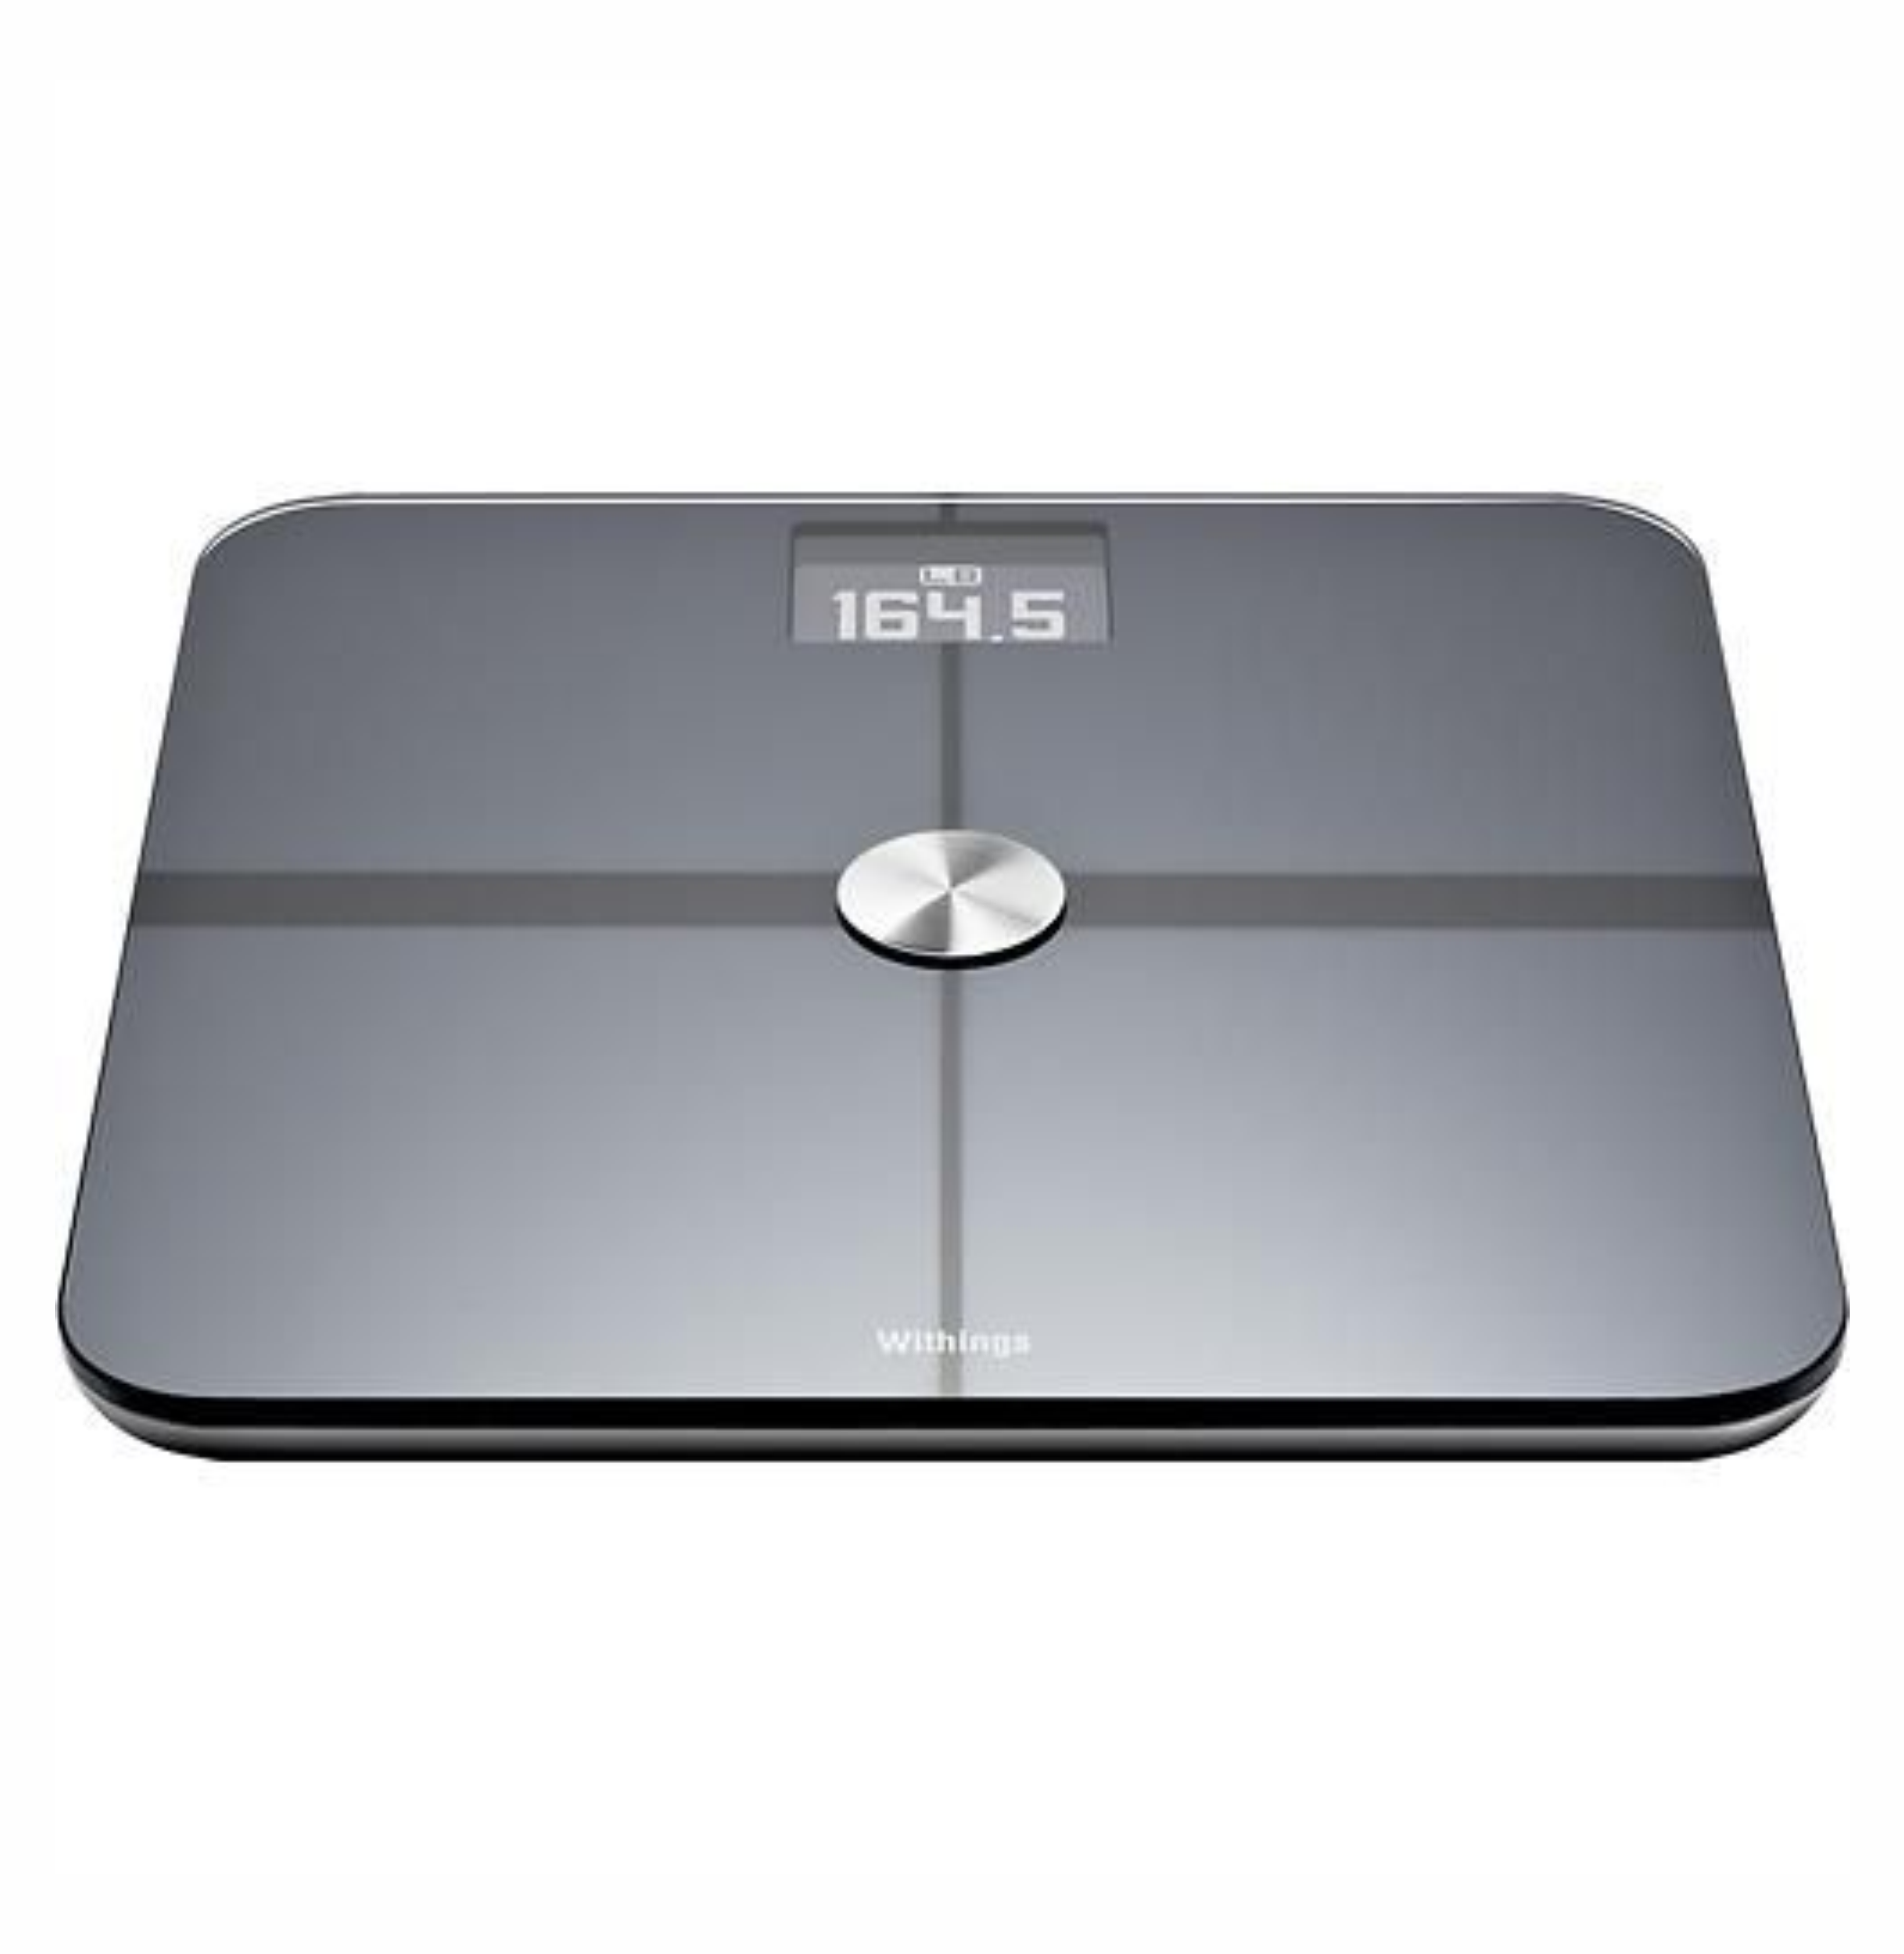 Весы Withings WiFi Body Scale c Wi-Fi для iPhone/iPod/iPad